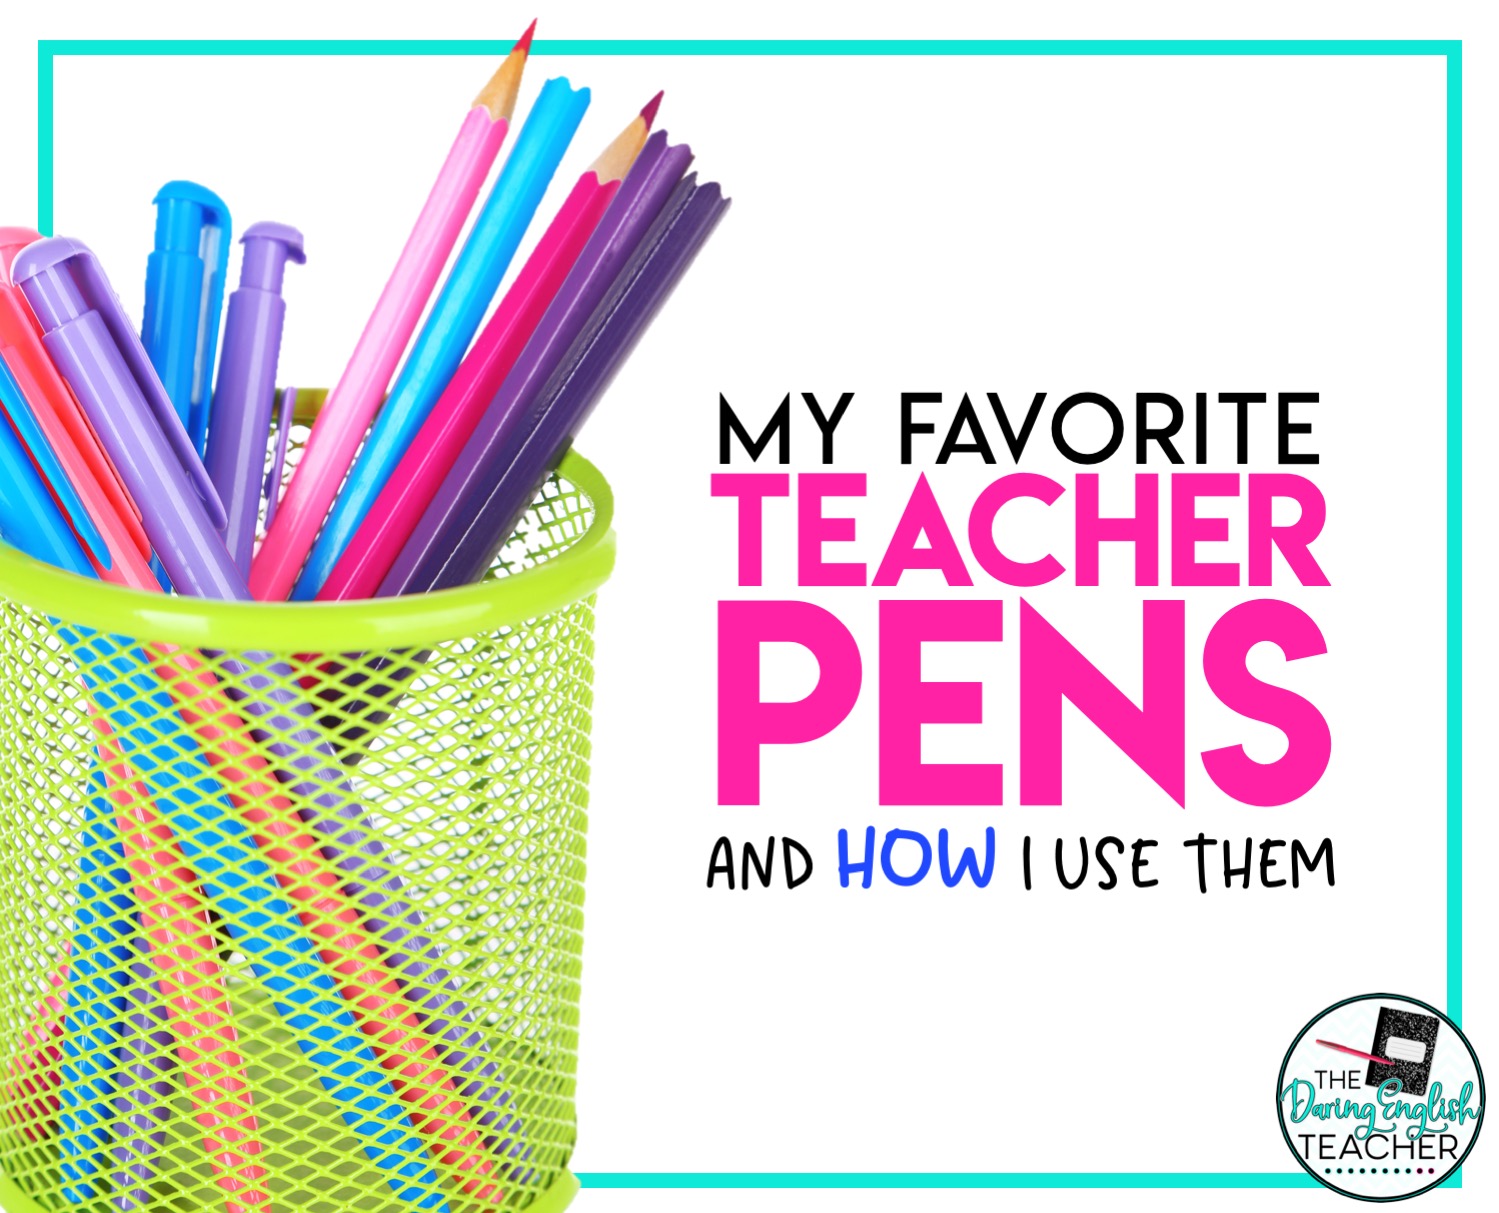 My Favorite Teacher Pens - The Daring English Teacher